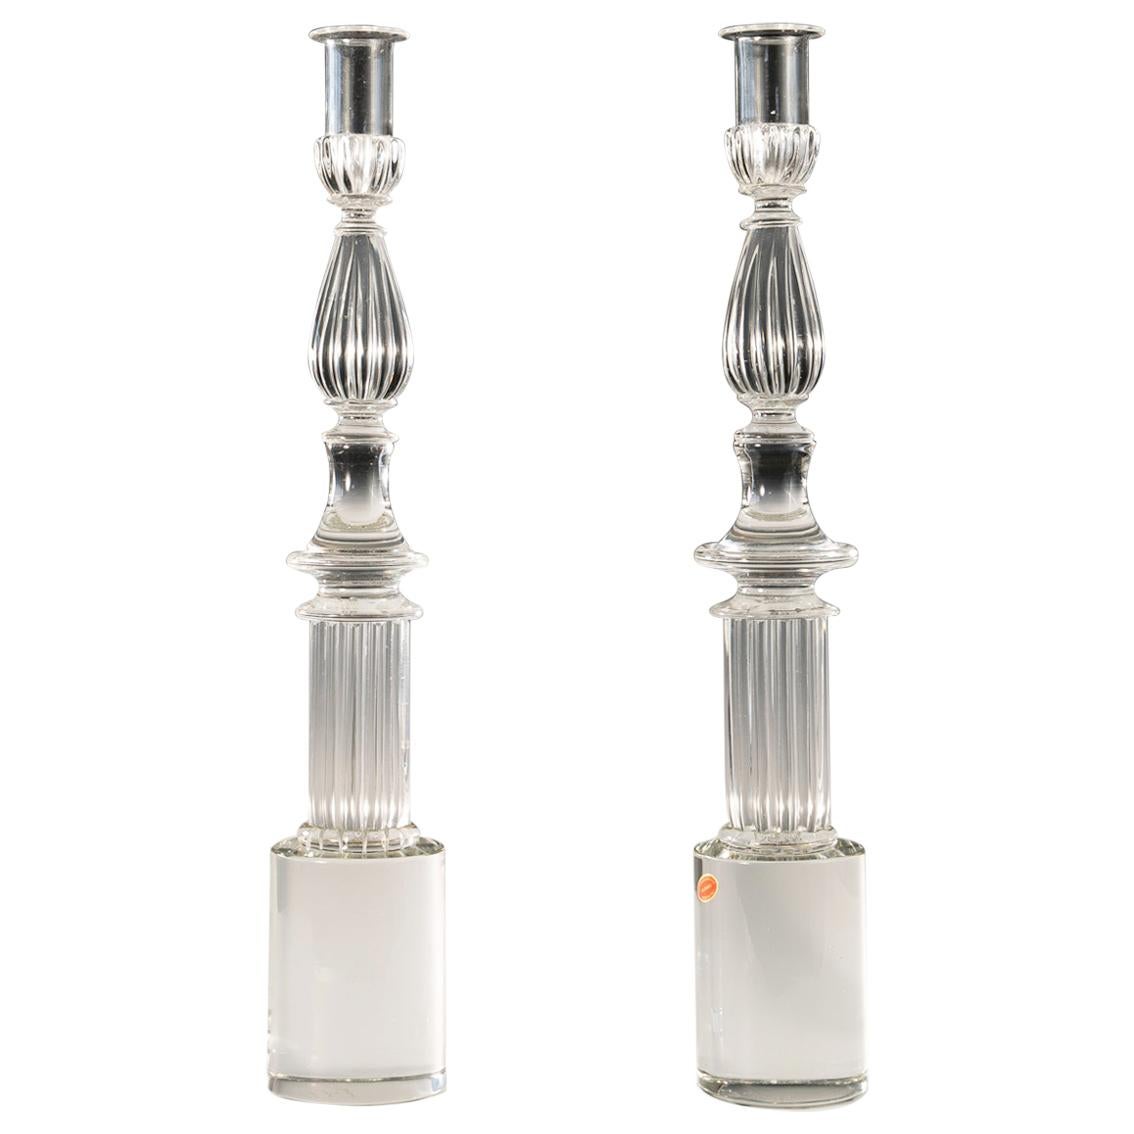 Pair of Seguso Candlesticks by John Loring of Tiffany & Co